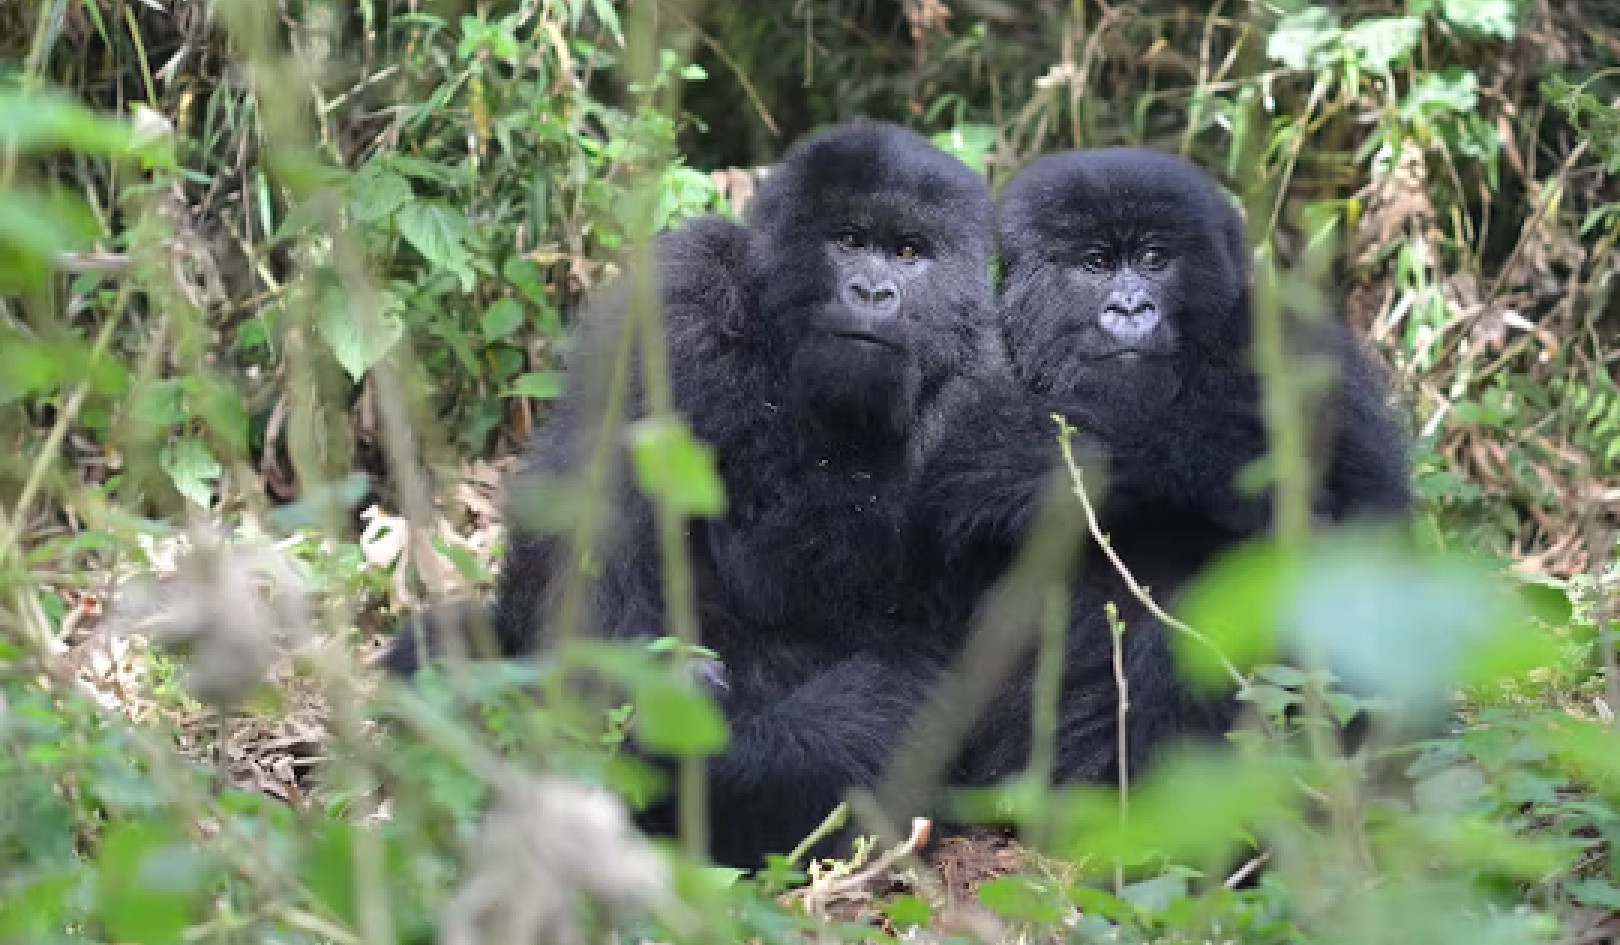 Berkembang dalam Menghadapi Kesulitan: Gorila Tangguh Mengungkapkan Petunjuk tentang Mengatasi Kemalangan Masa Kecil